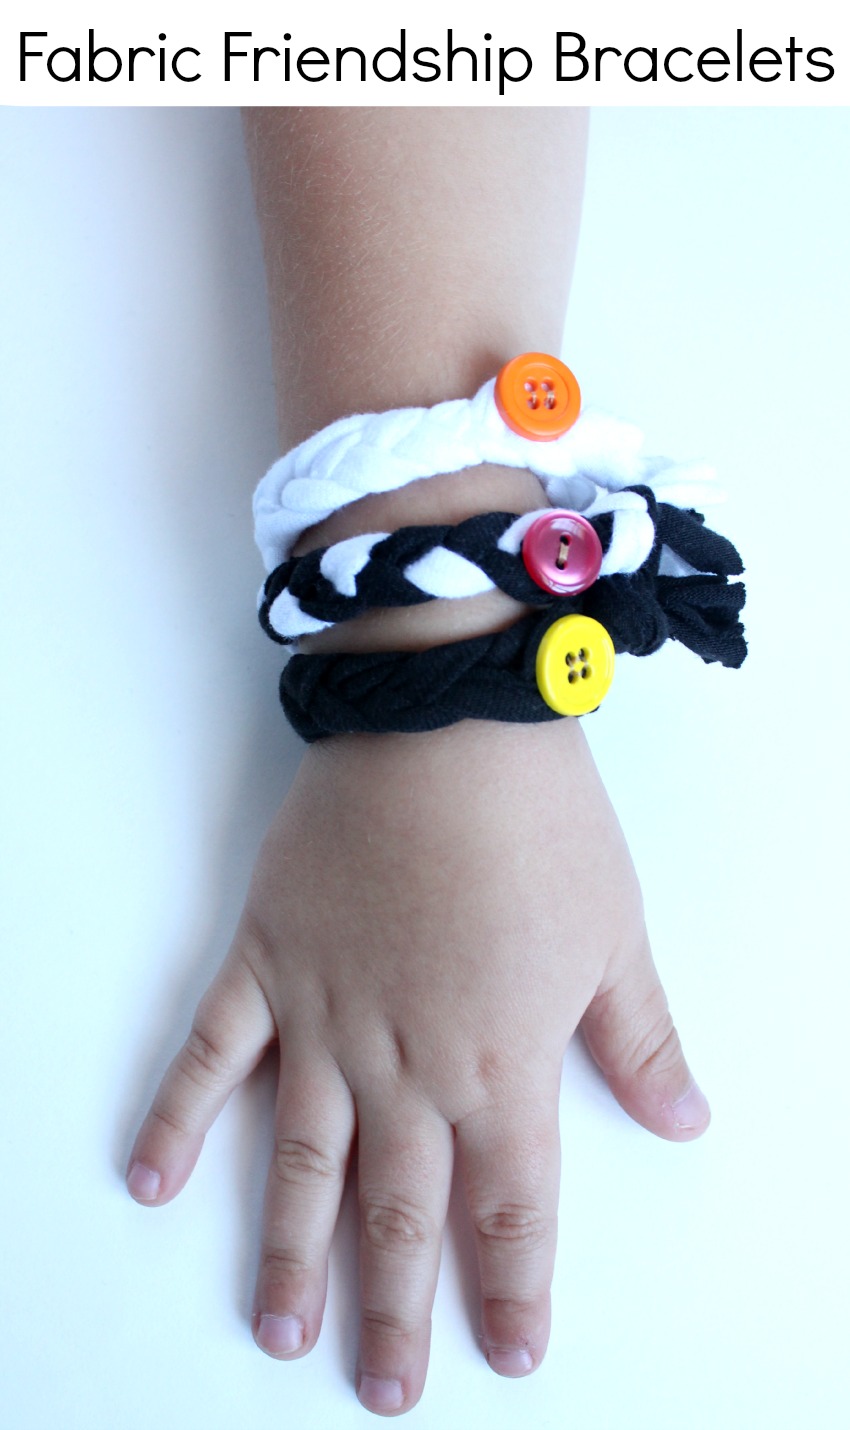 Fabric Friendship Bracelets Craft for Kids